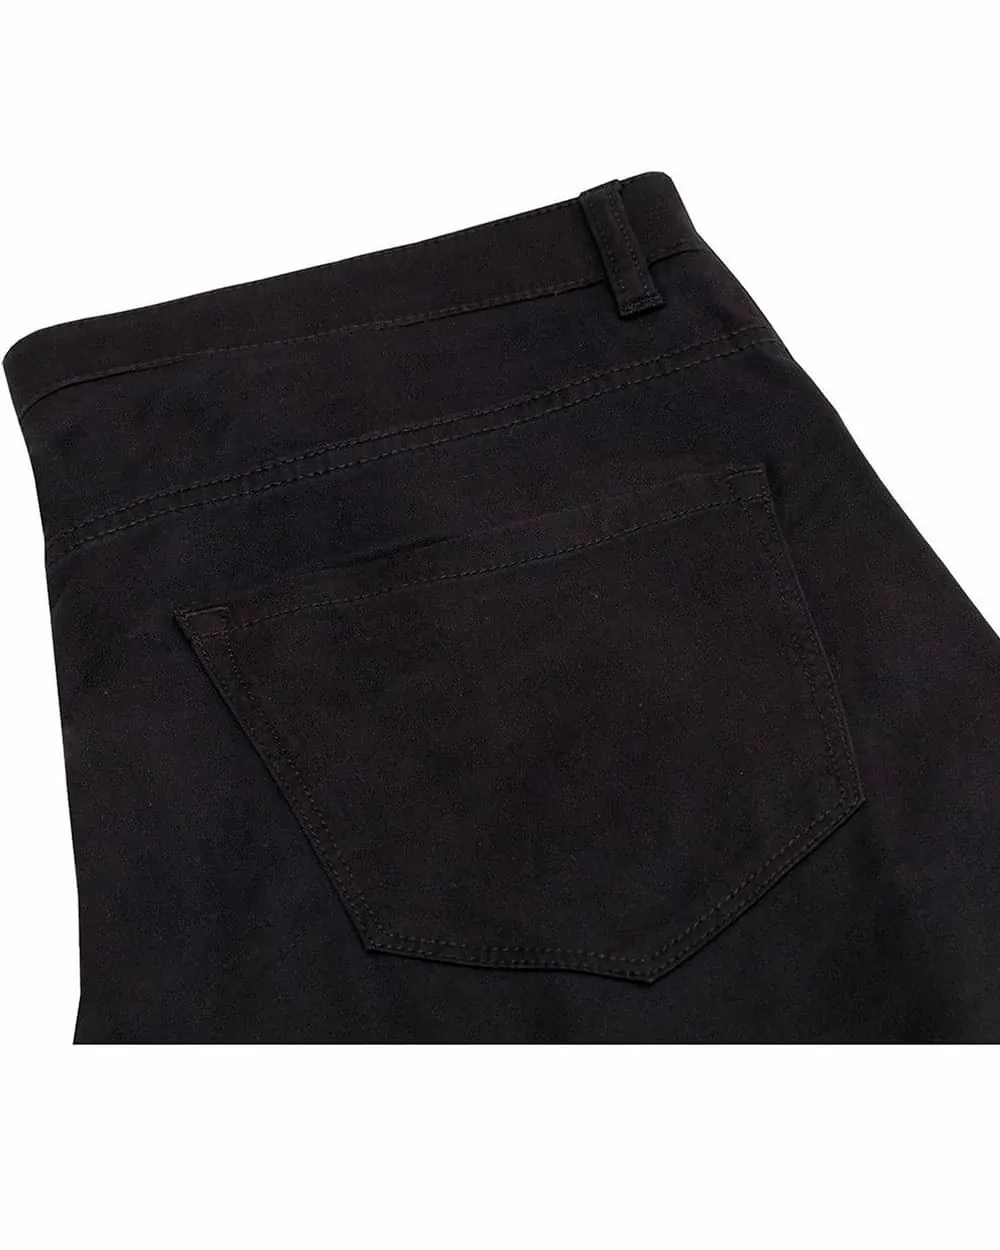 Pantalón casual slim fit 5 pocket negro